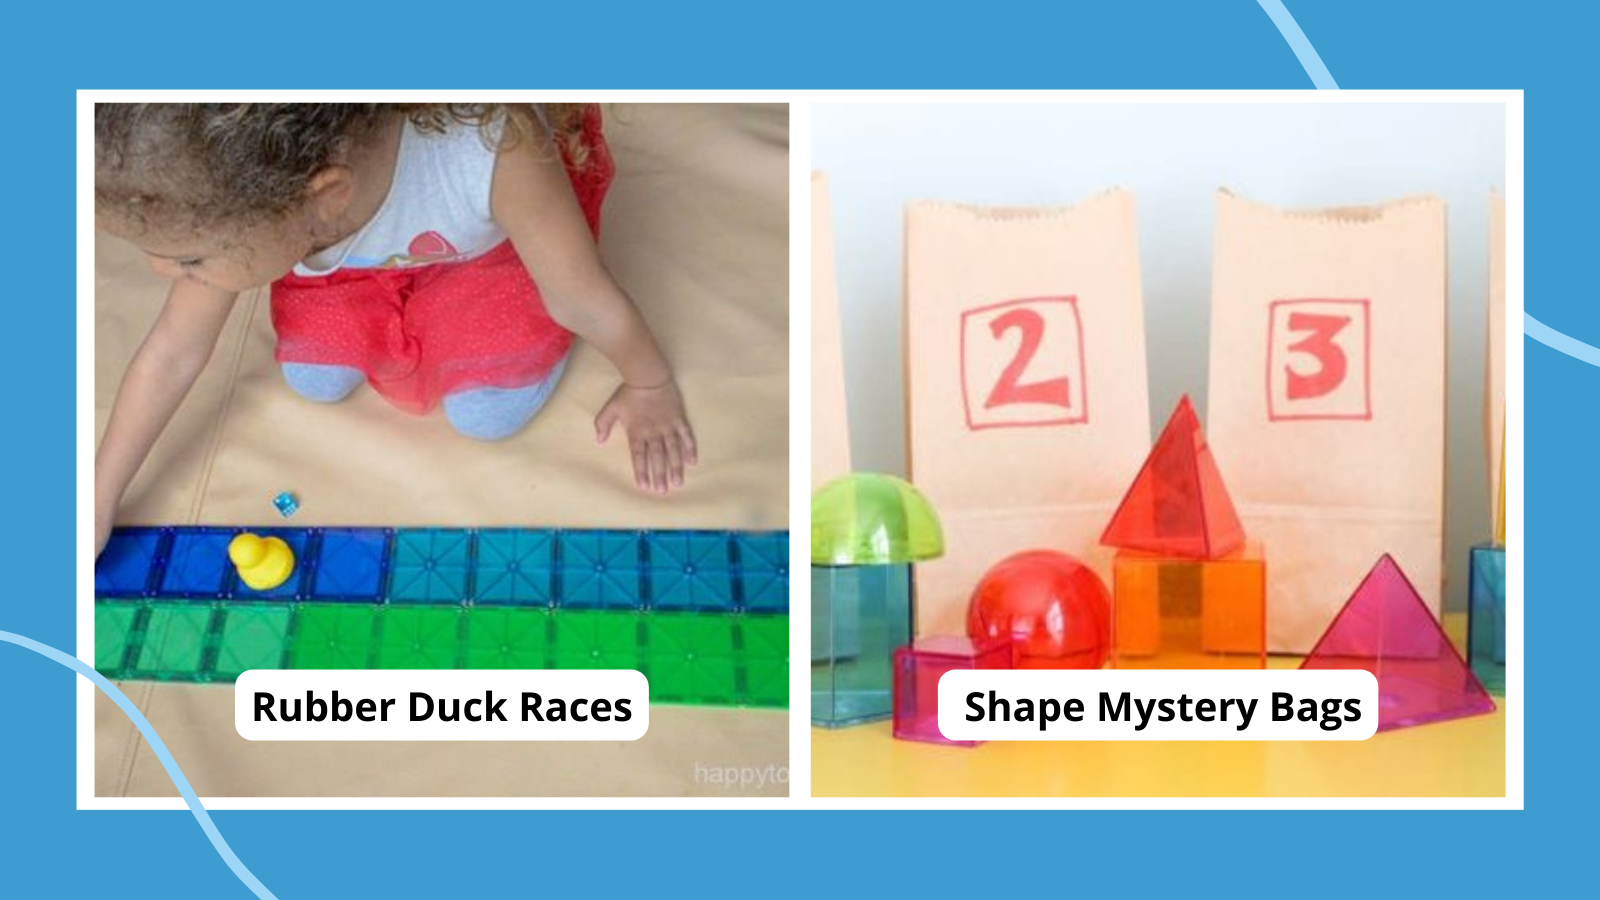 30 Must-Have Kids' Craft Supplies - Playdough To Plato